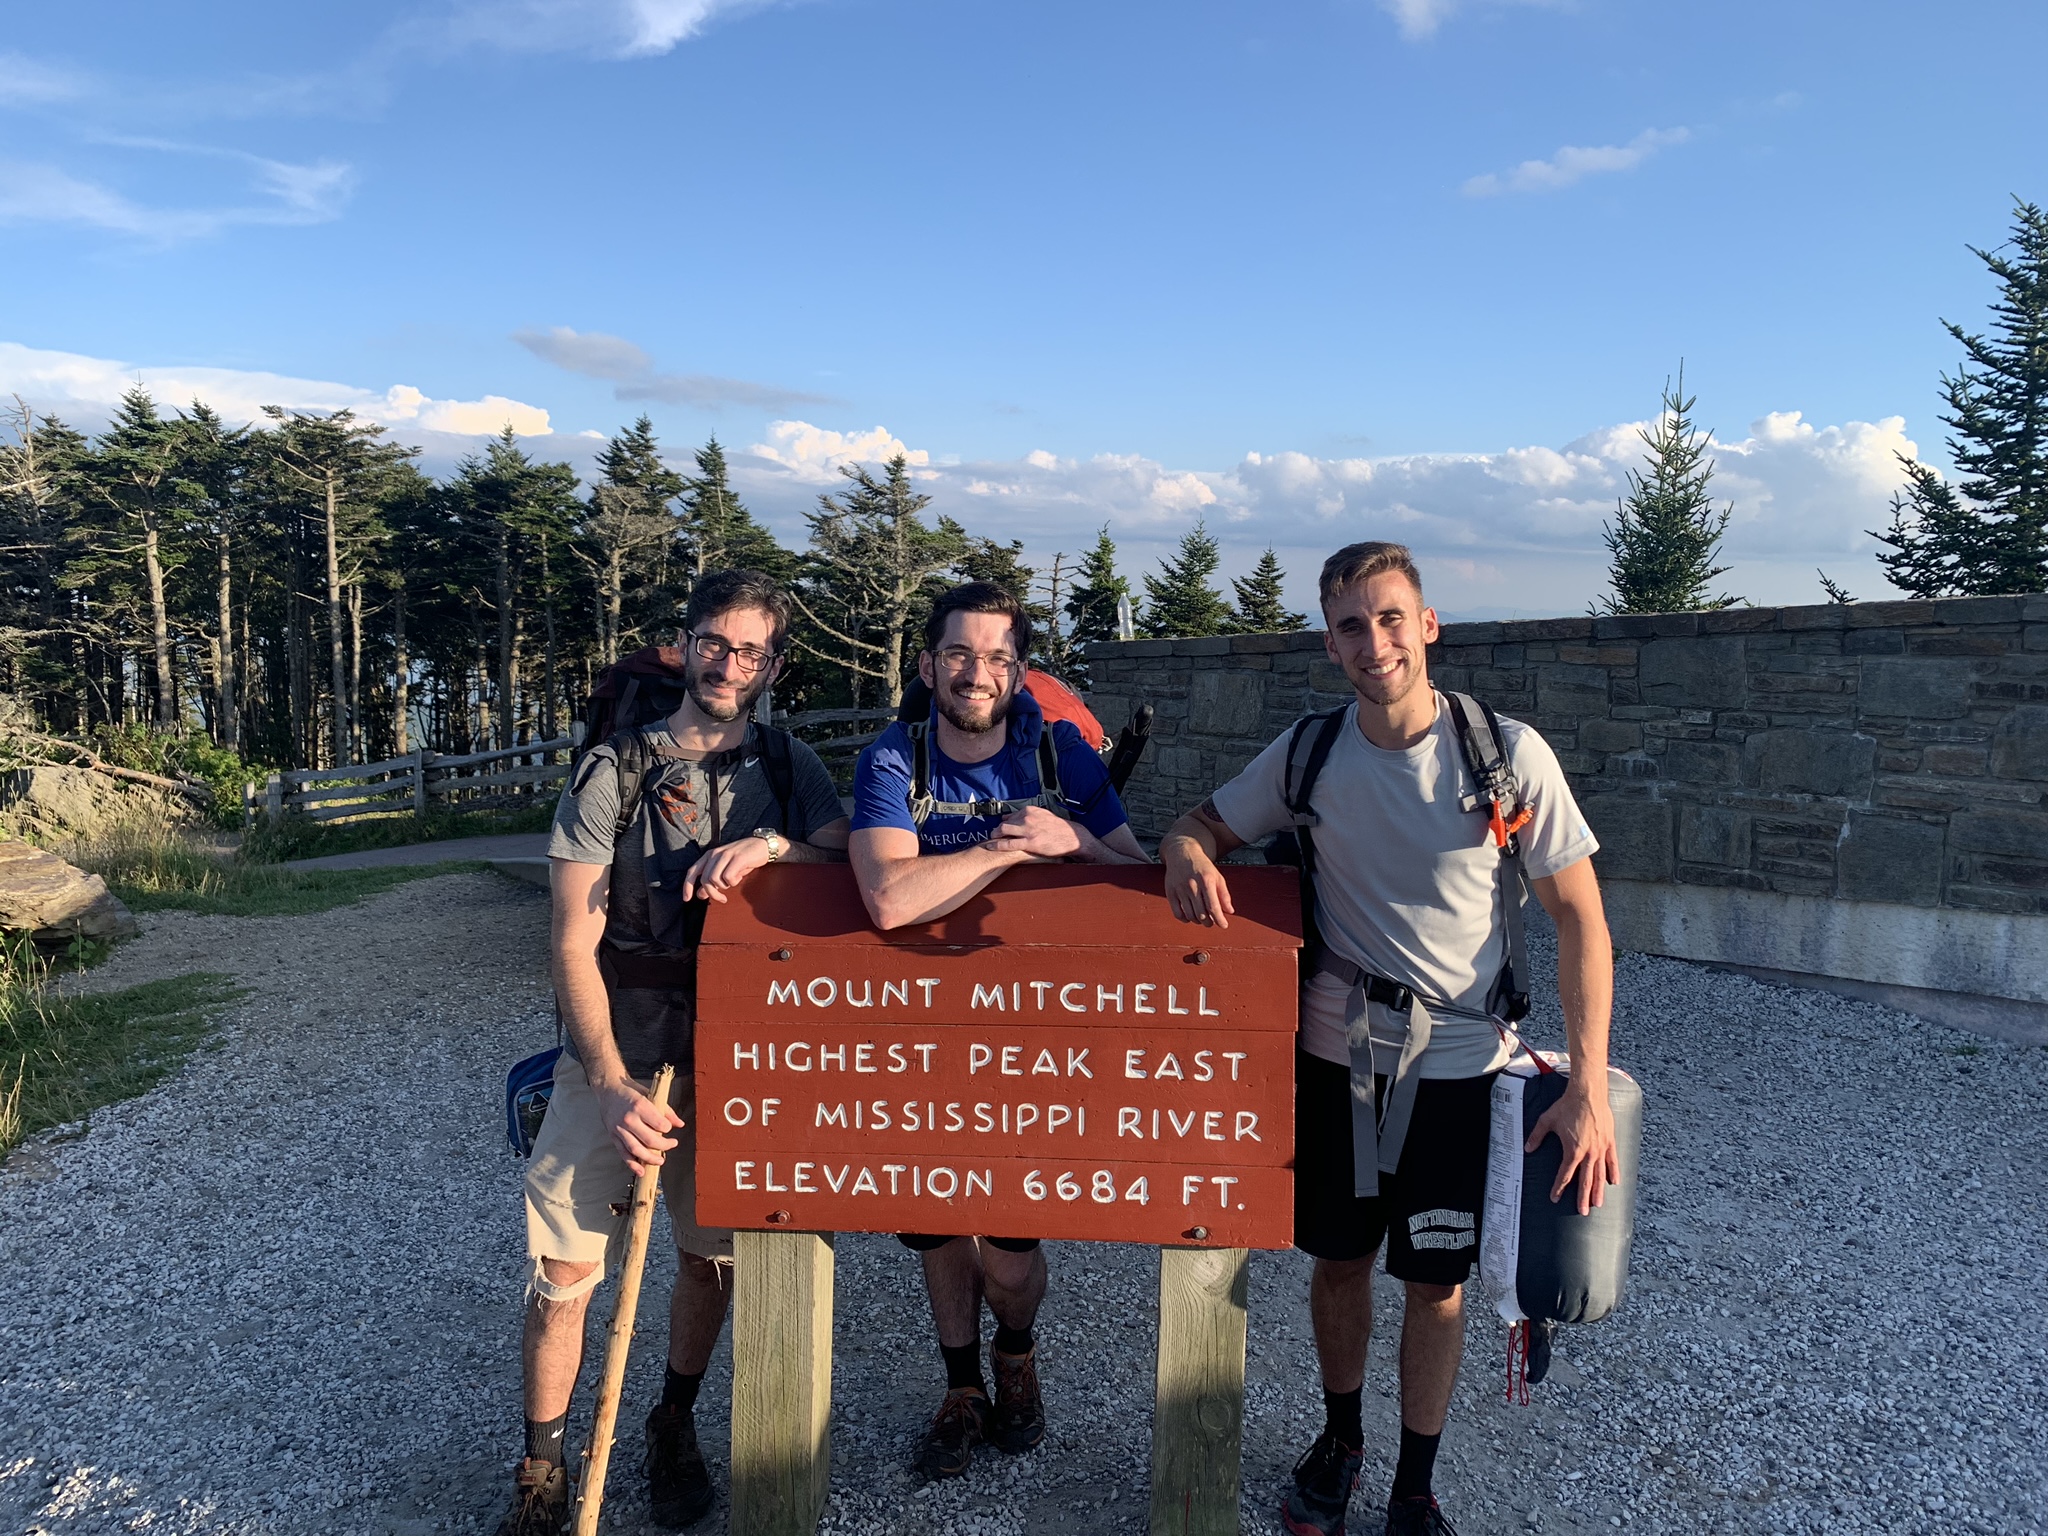 Climbing Mt. Mitchell, nearly 7,000 feet above sea level